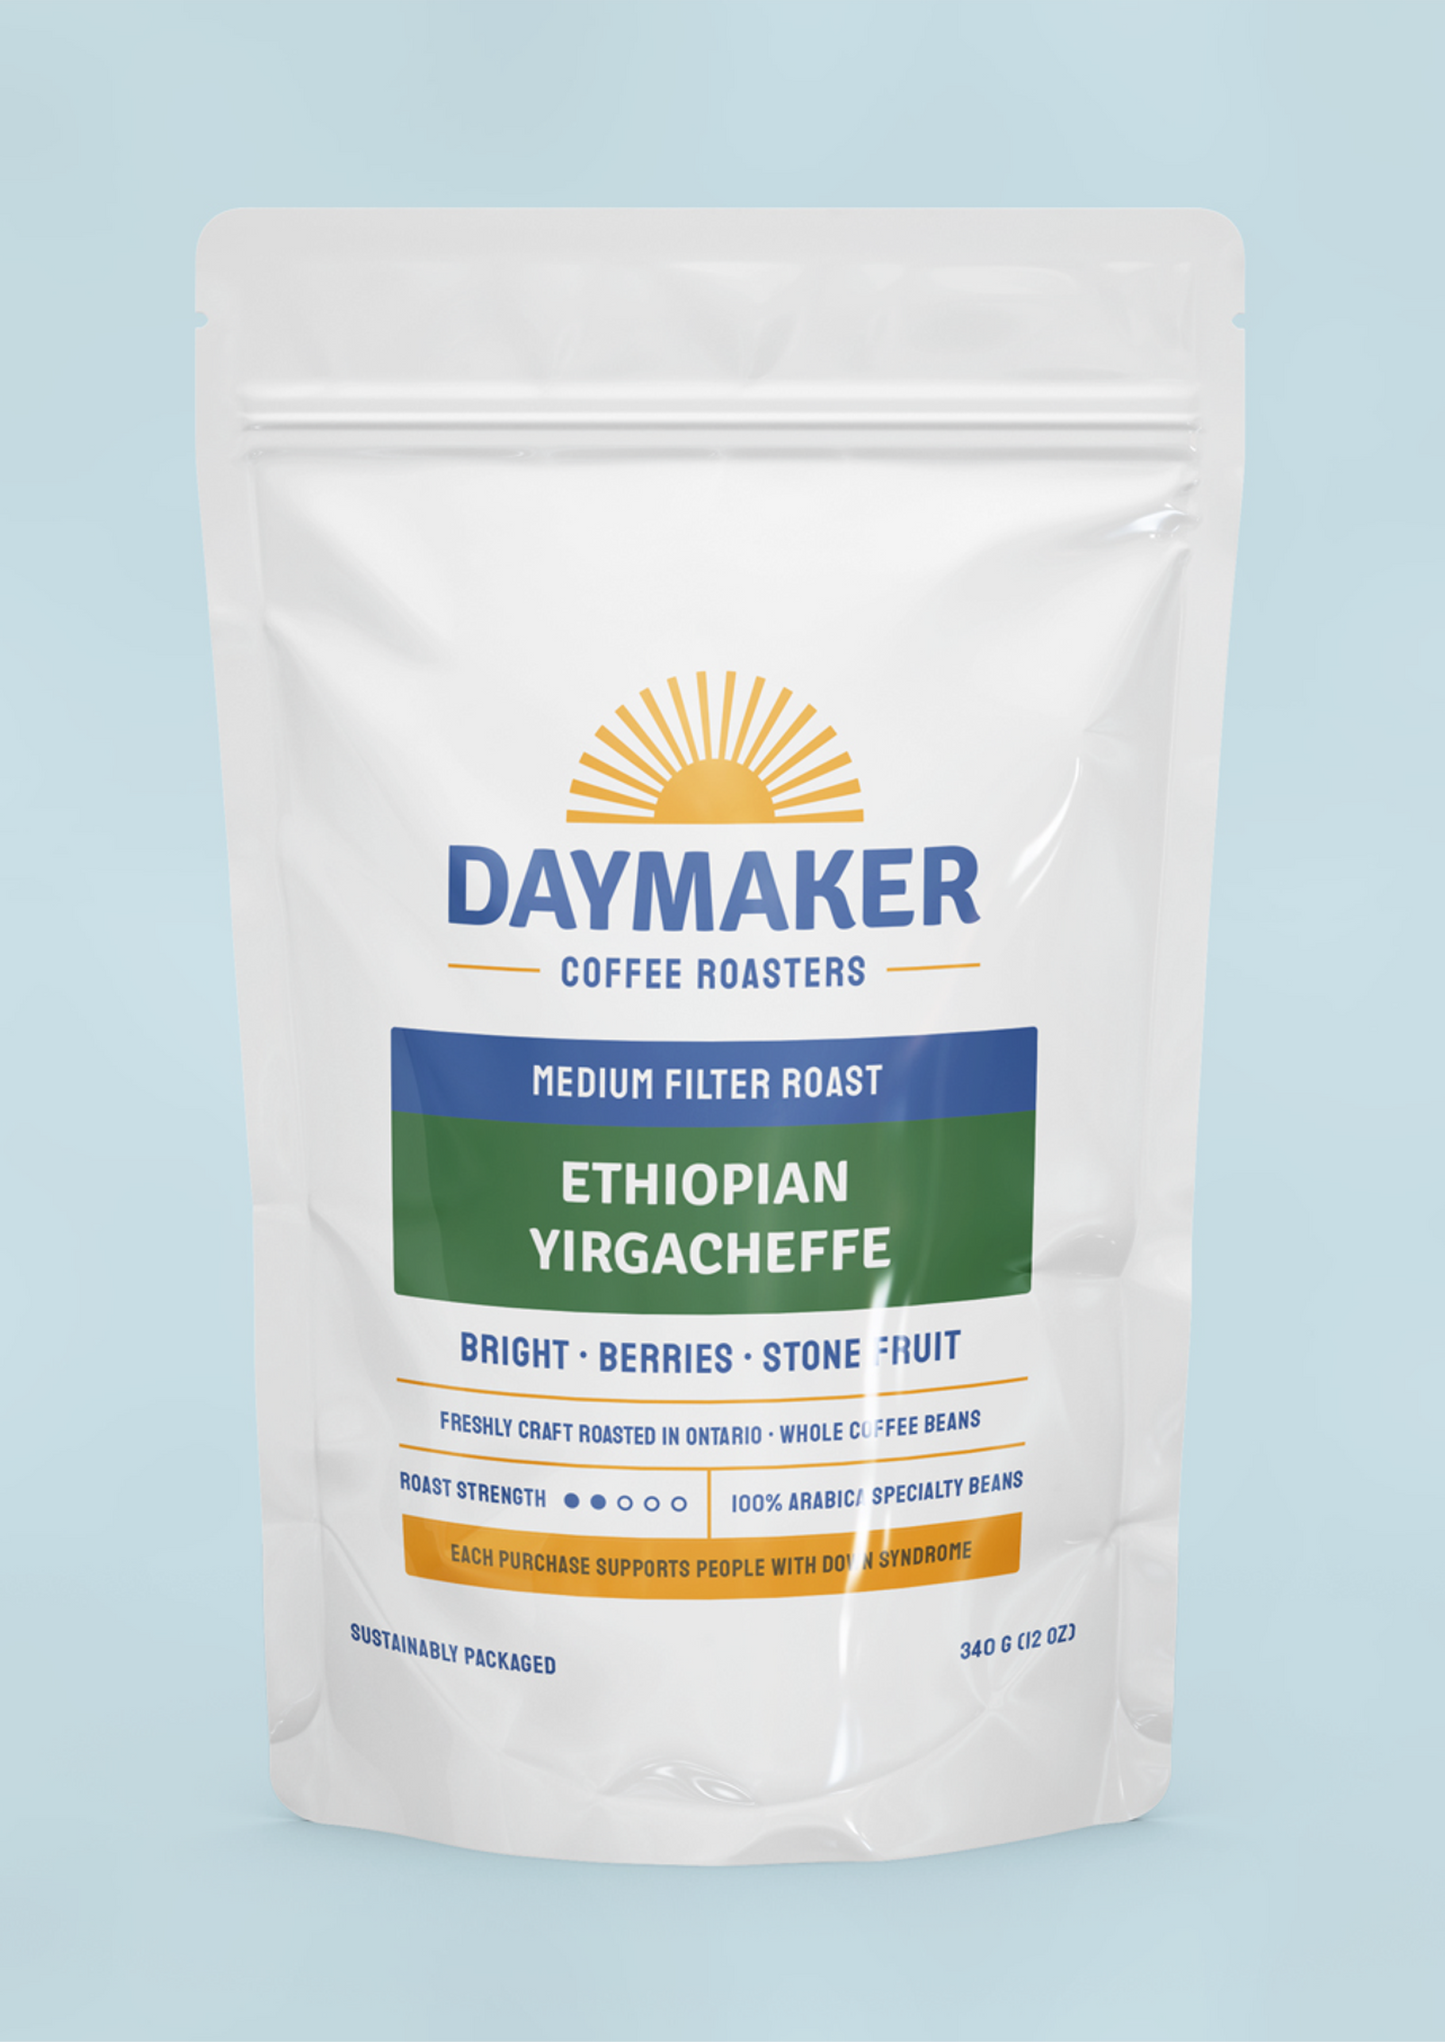 Daymaker Coffee Ethiopian Yirgacheffe Image of Pouch